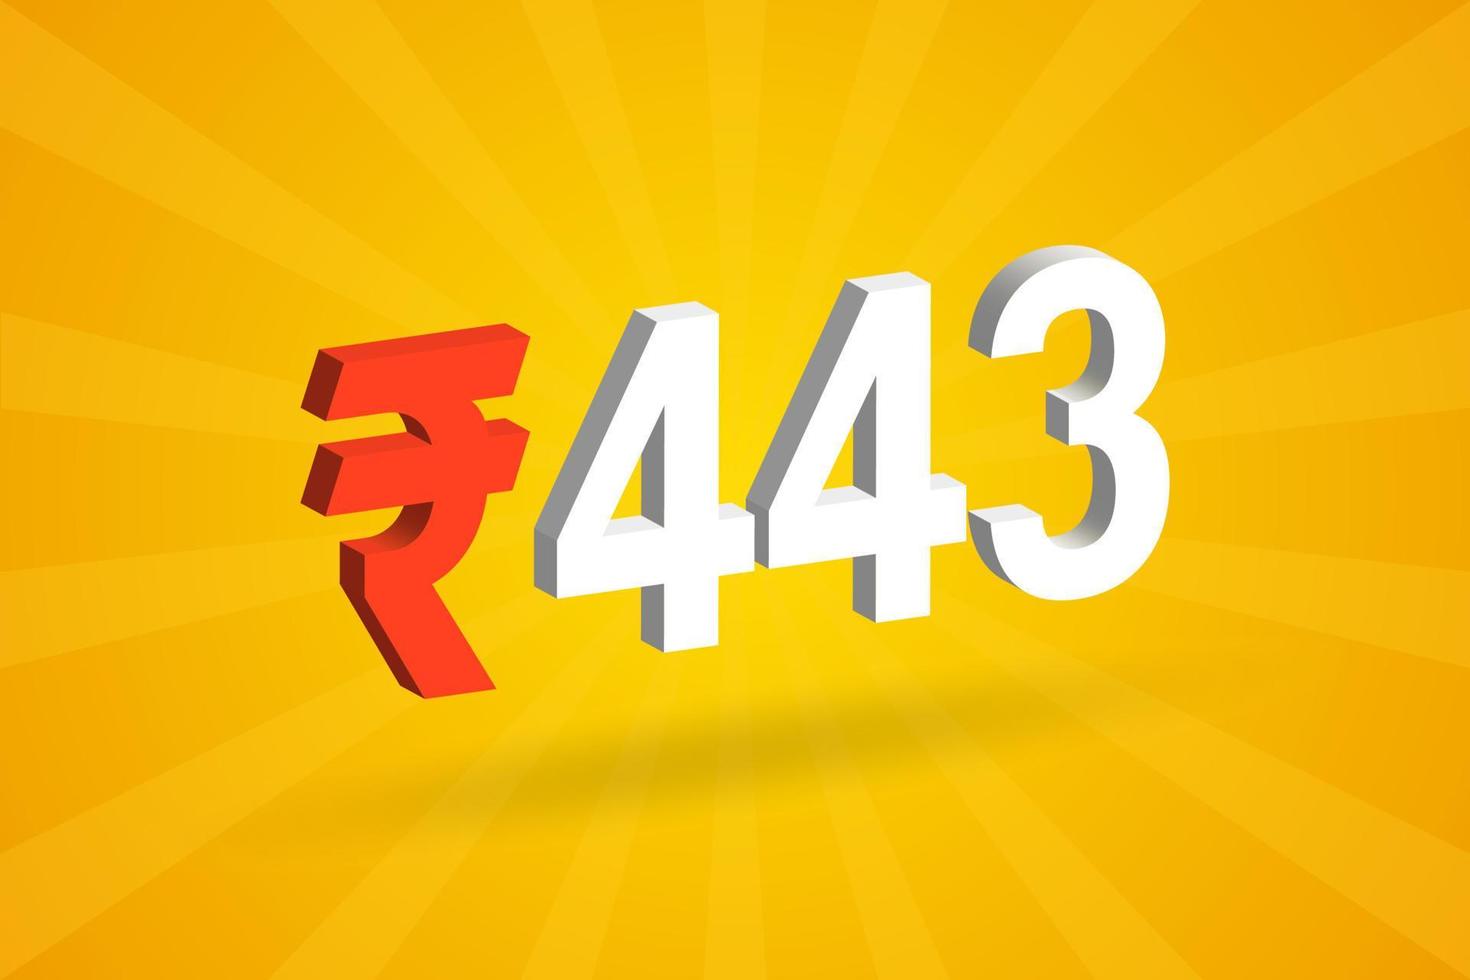 443 rupia 3d símbolo imagen vectorial de texto en negrita. 3d 443 rupia india signo de moneda ilustración vectorial vector